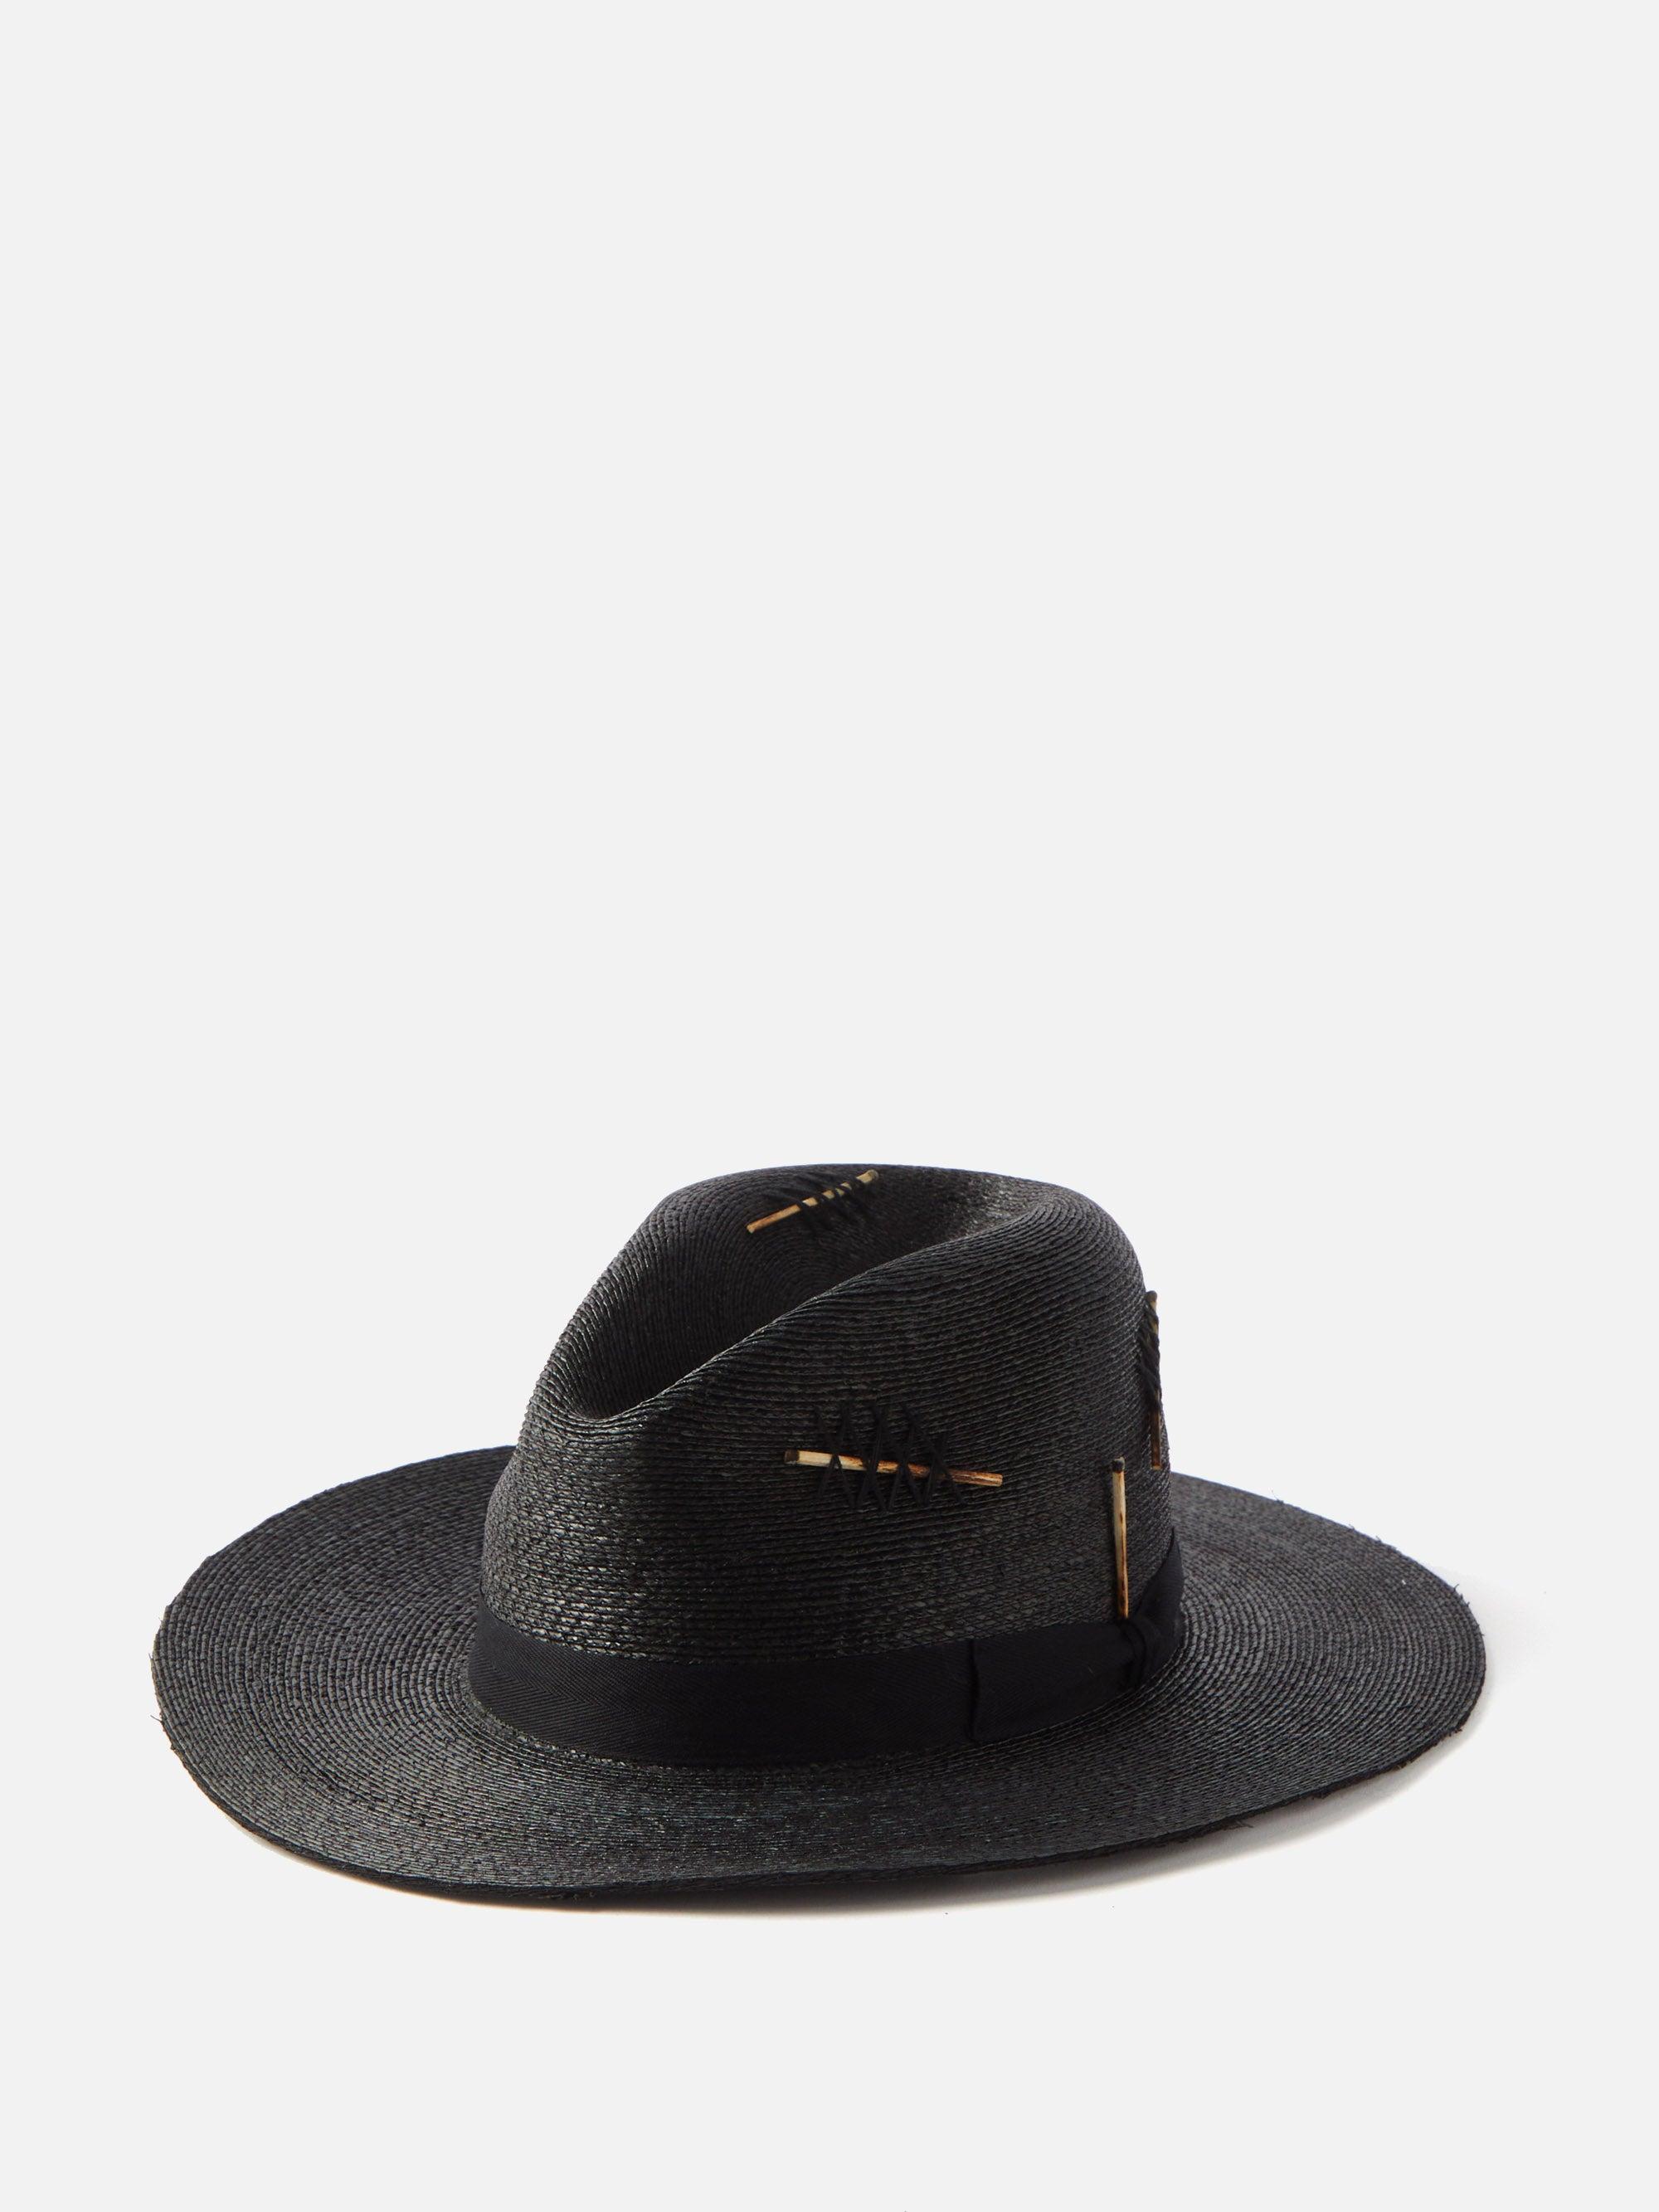 Nick Fouquet Vaquero Matchstick Straw Panama Hat in Black for Men | Lyst